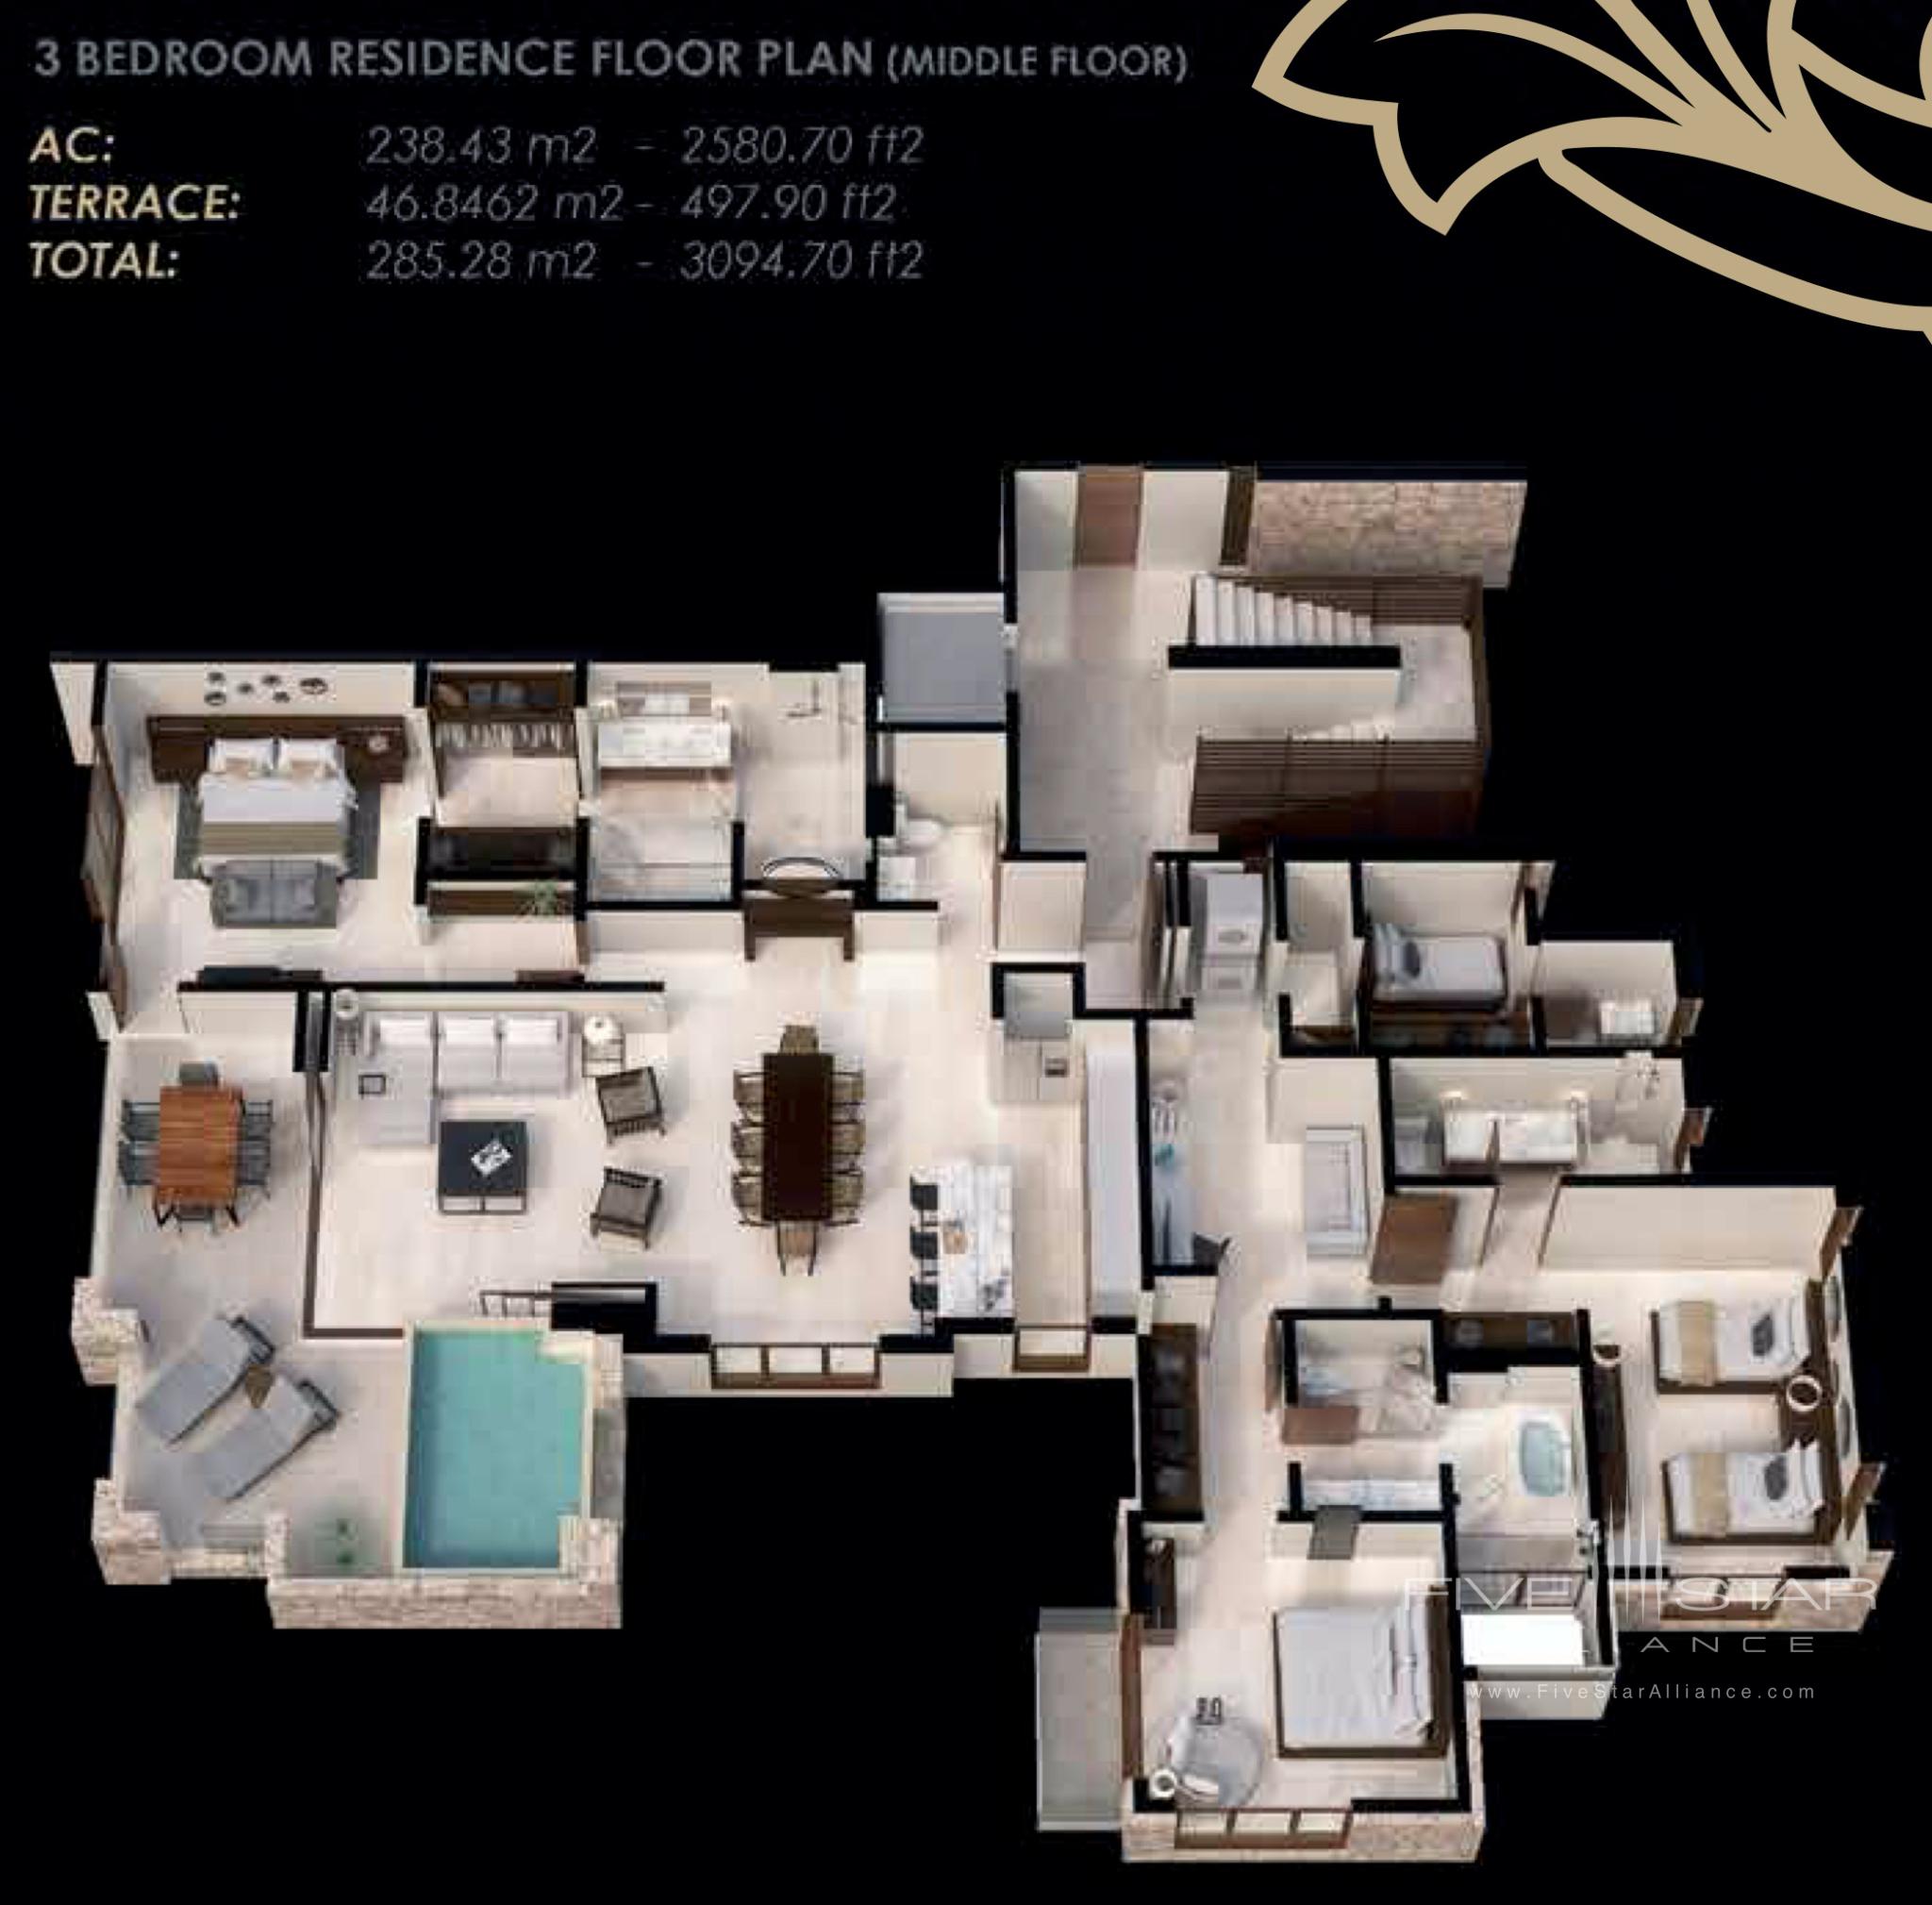 3 Bedroom Middle Floor Residence Floor Plan